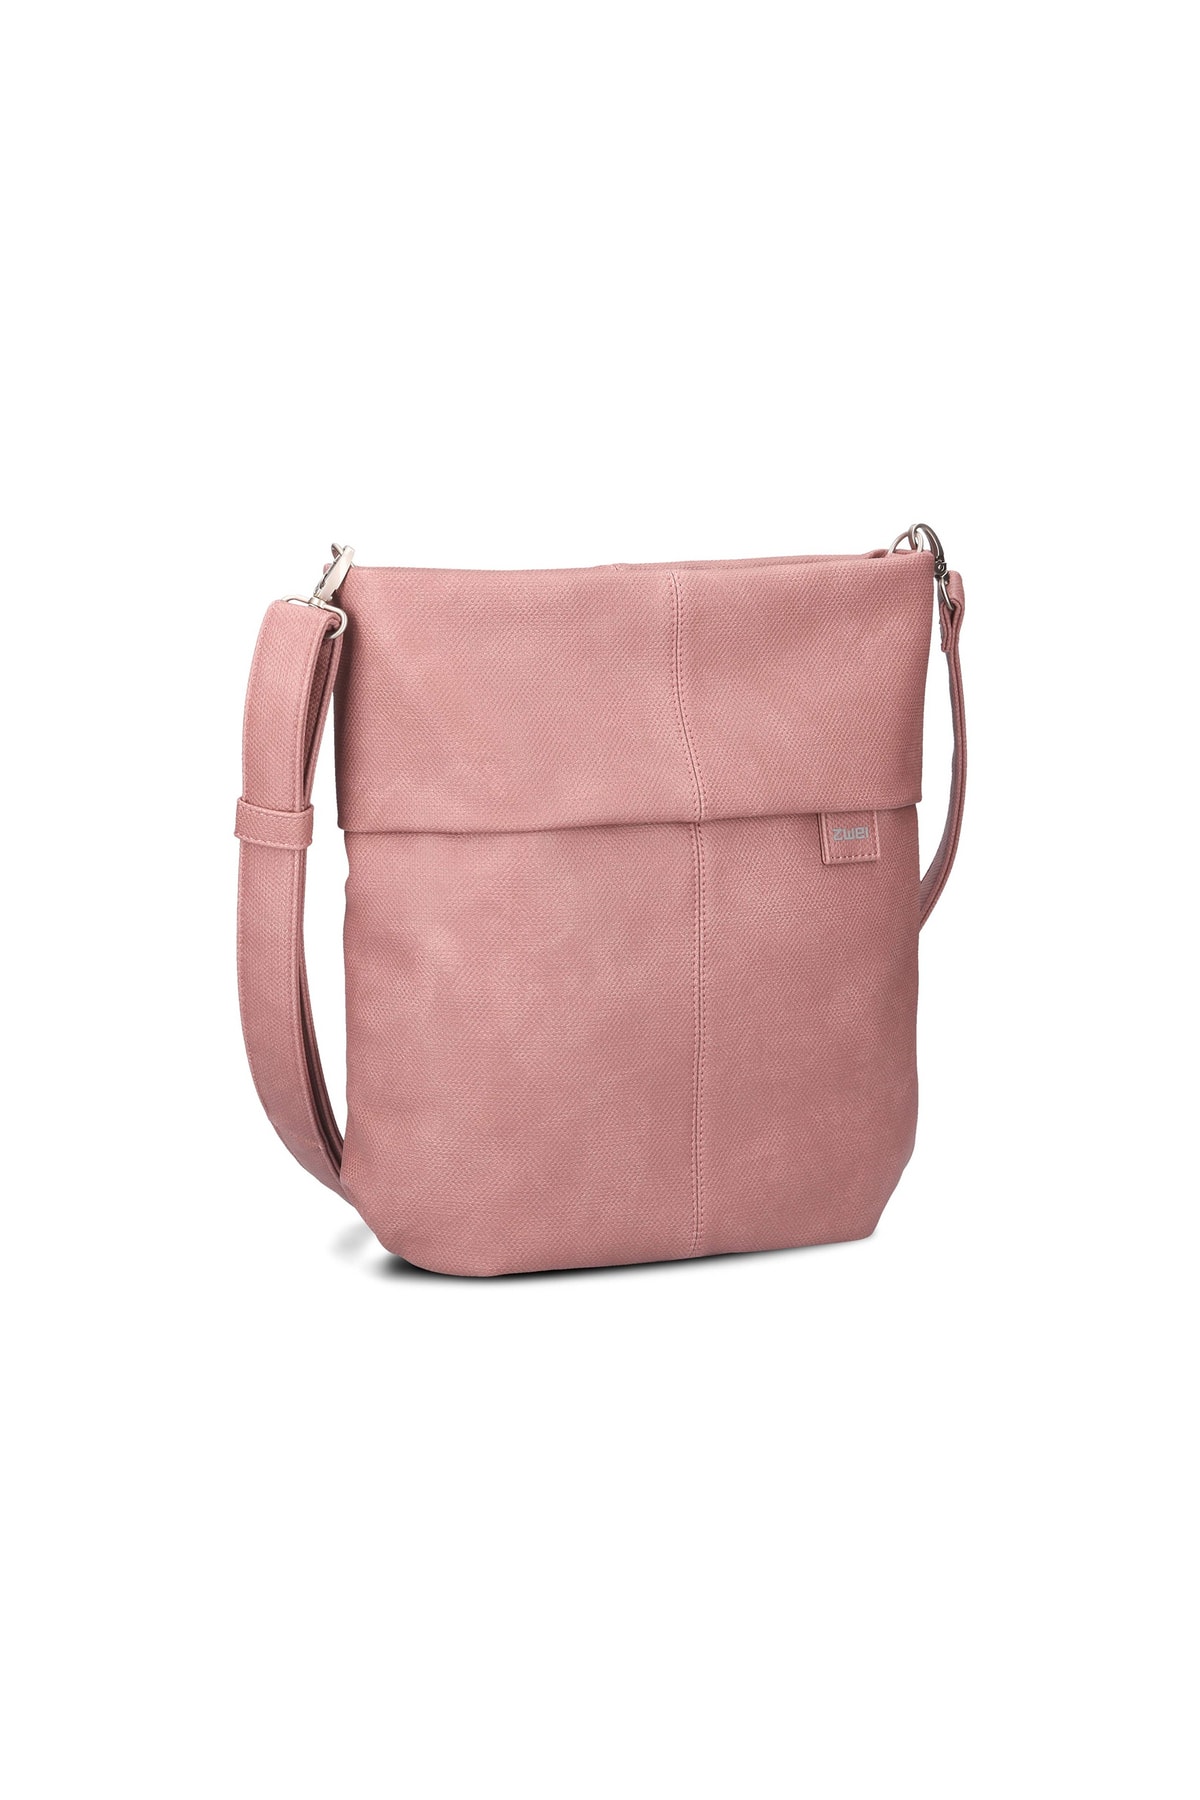 ZWEI Handtasche Rosa Strukturiert Fast ausverkauft